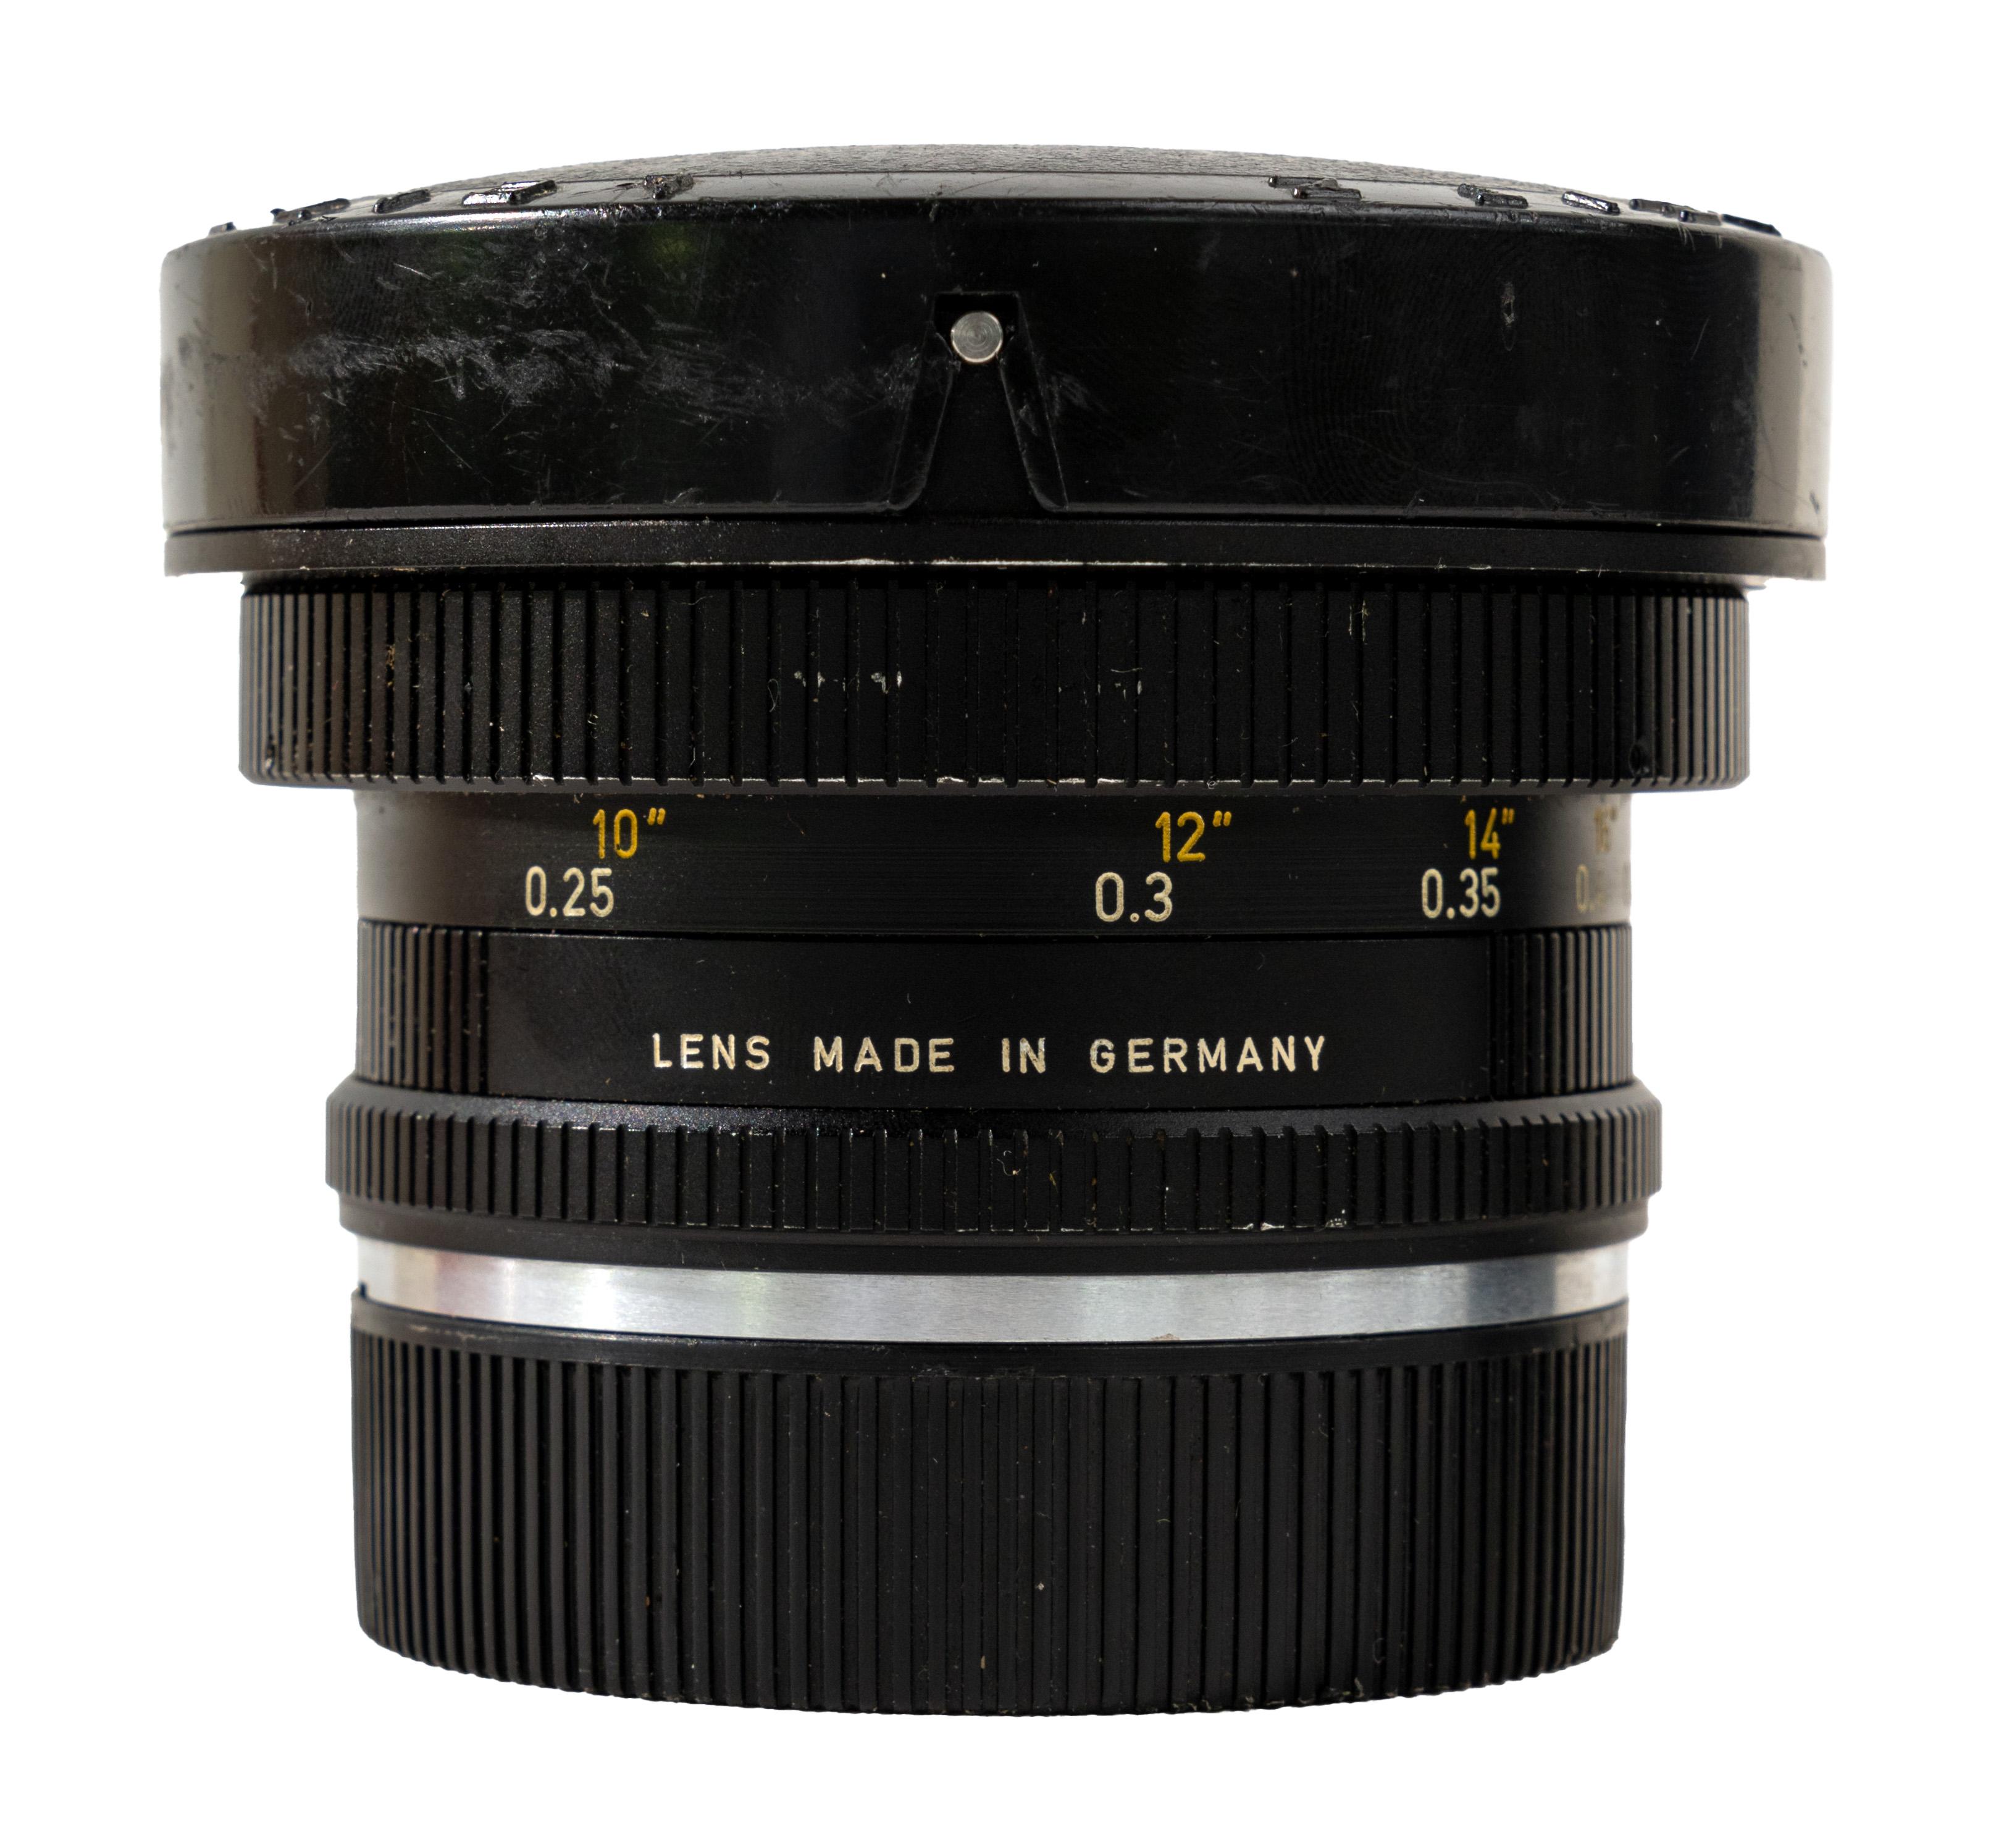 Leitz Wetzlar Super-Angulon-R 1:4/21mm Lens With Box